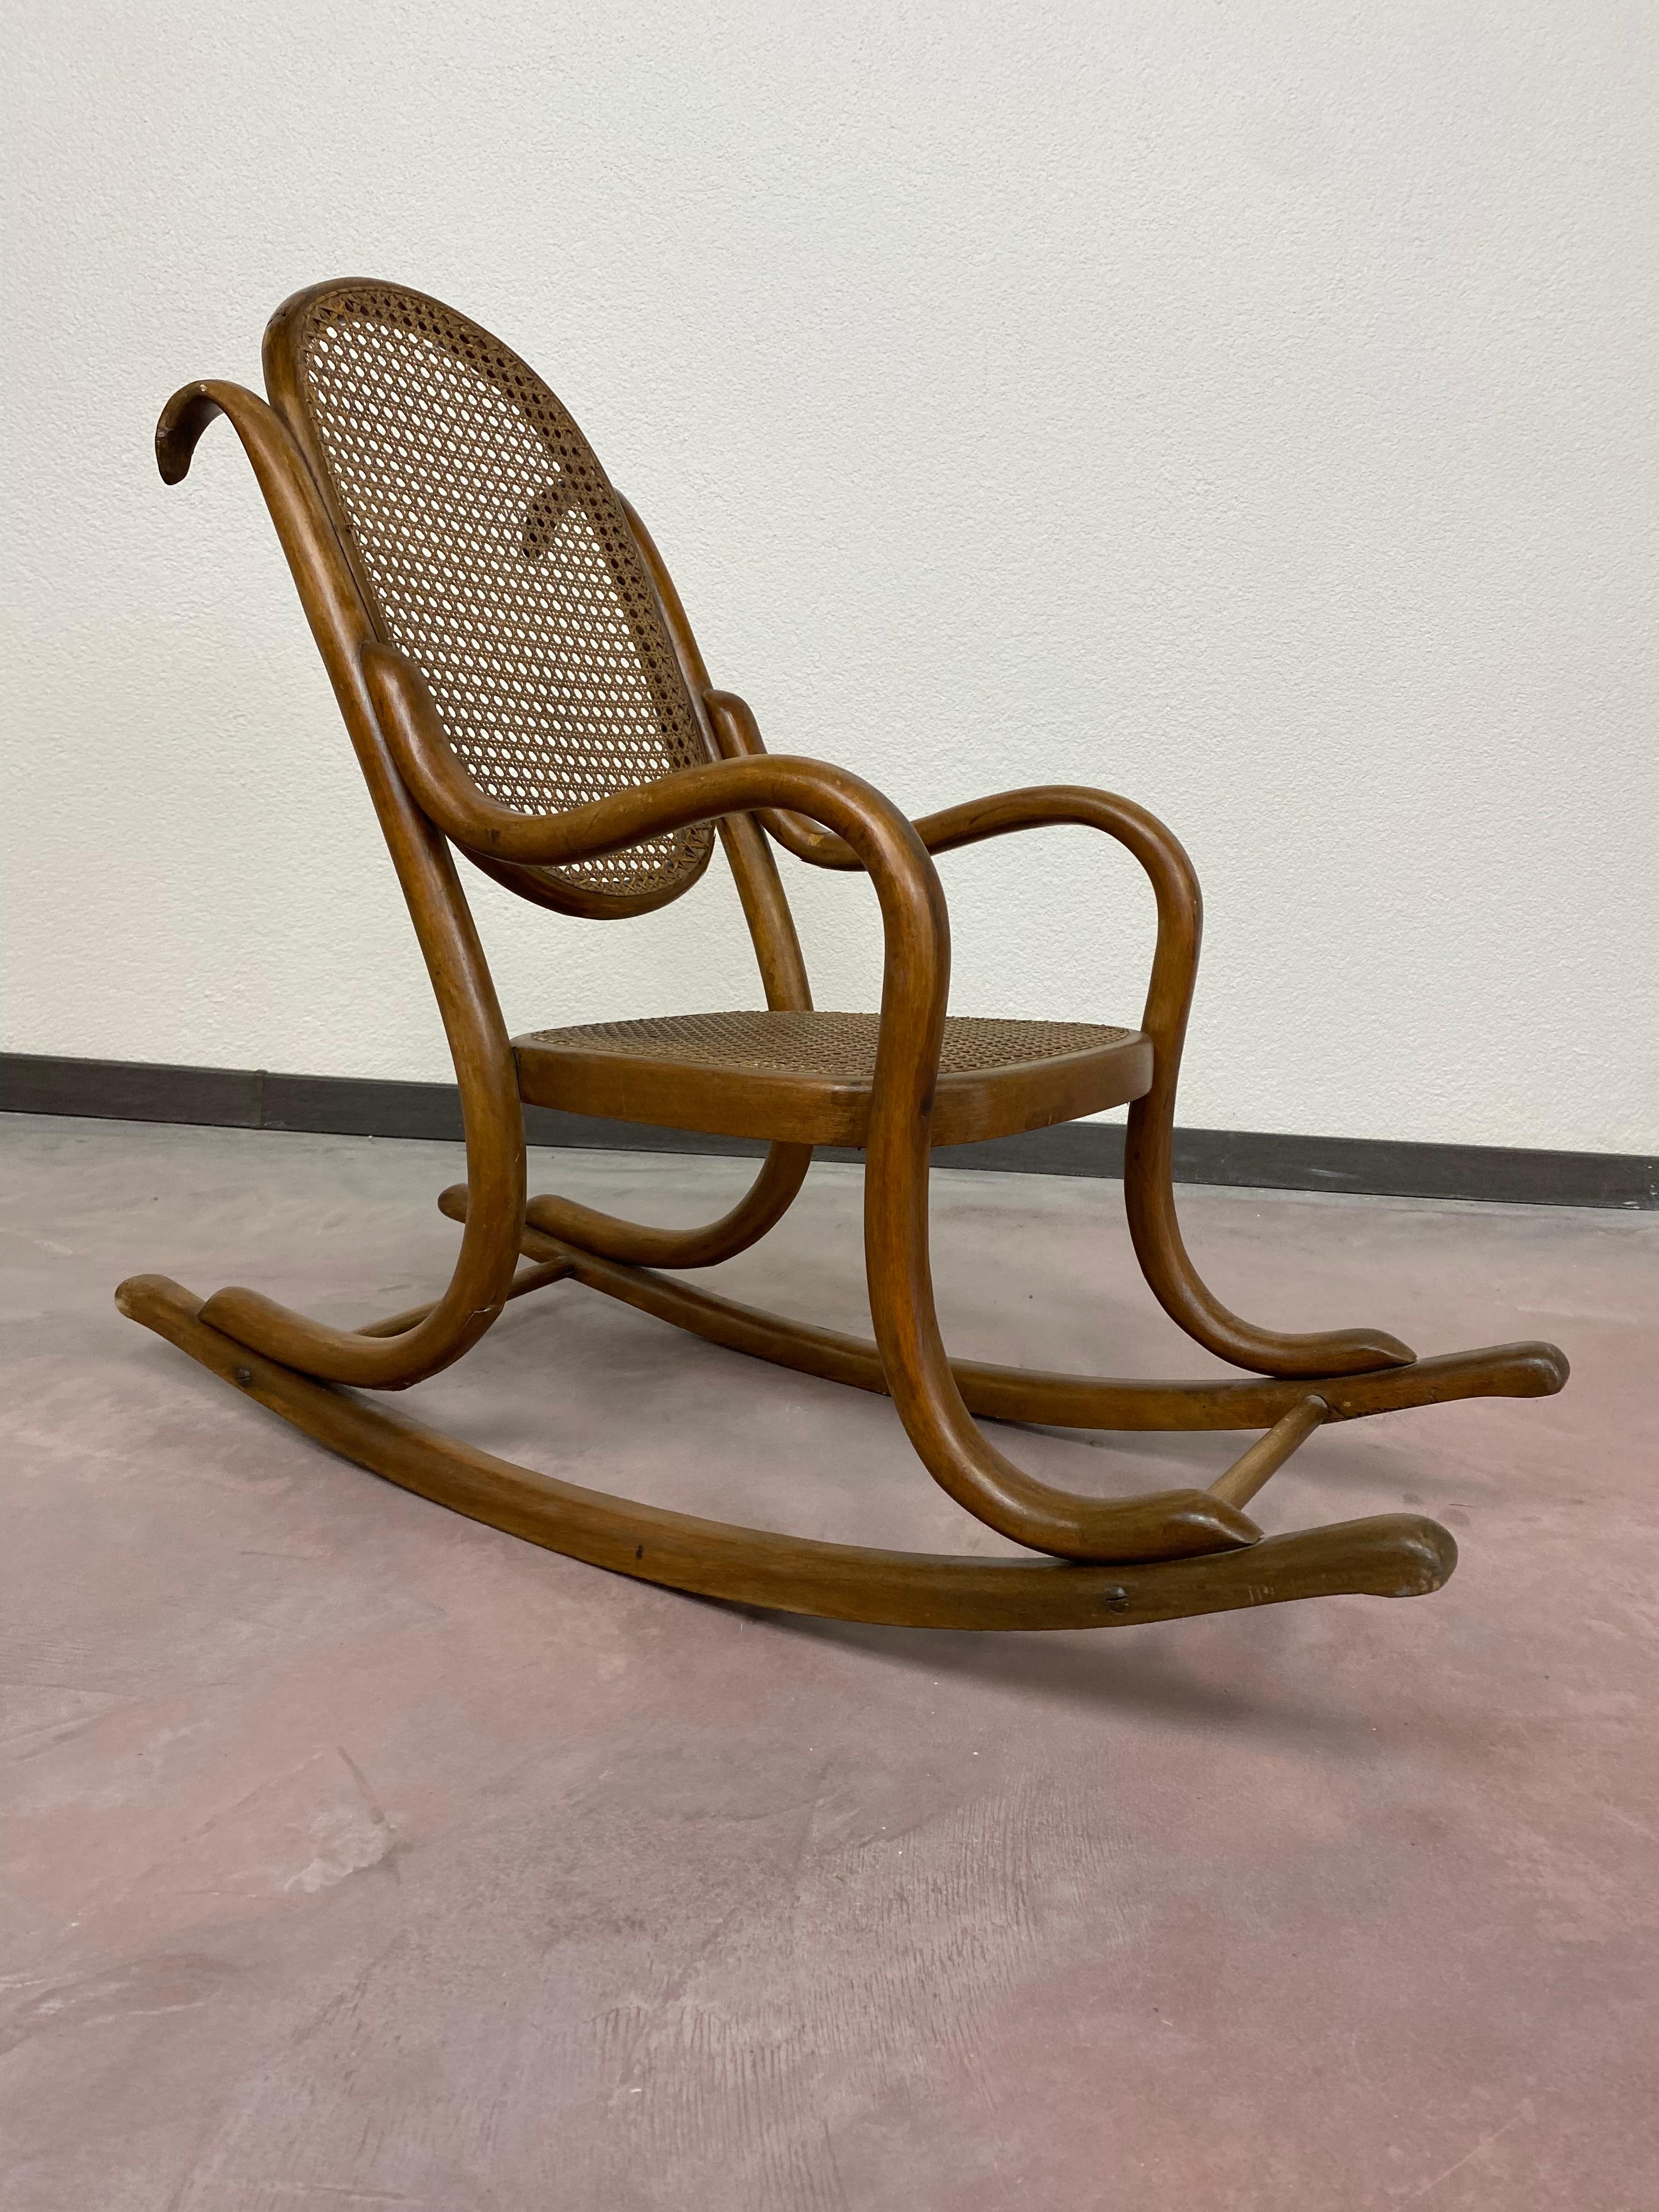 Rocking chair for children no.2 in original condition.